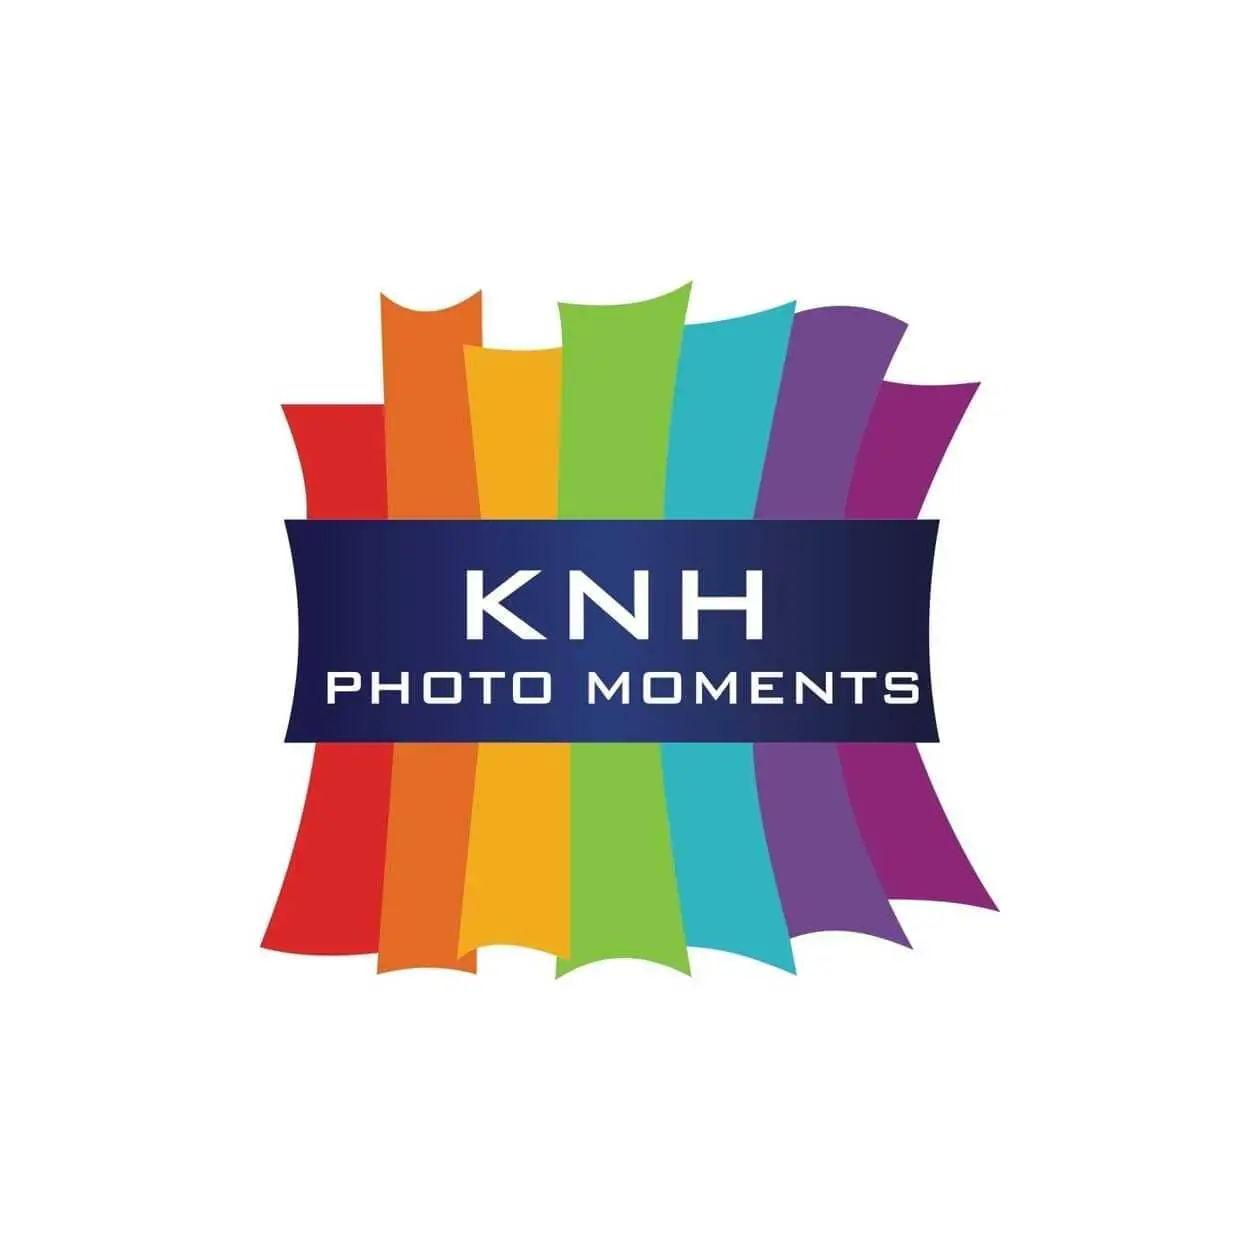 KNH Photomoments